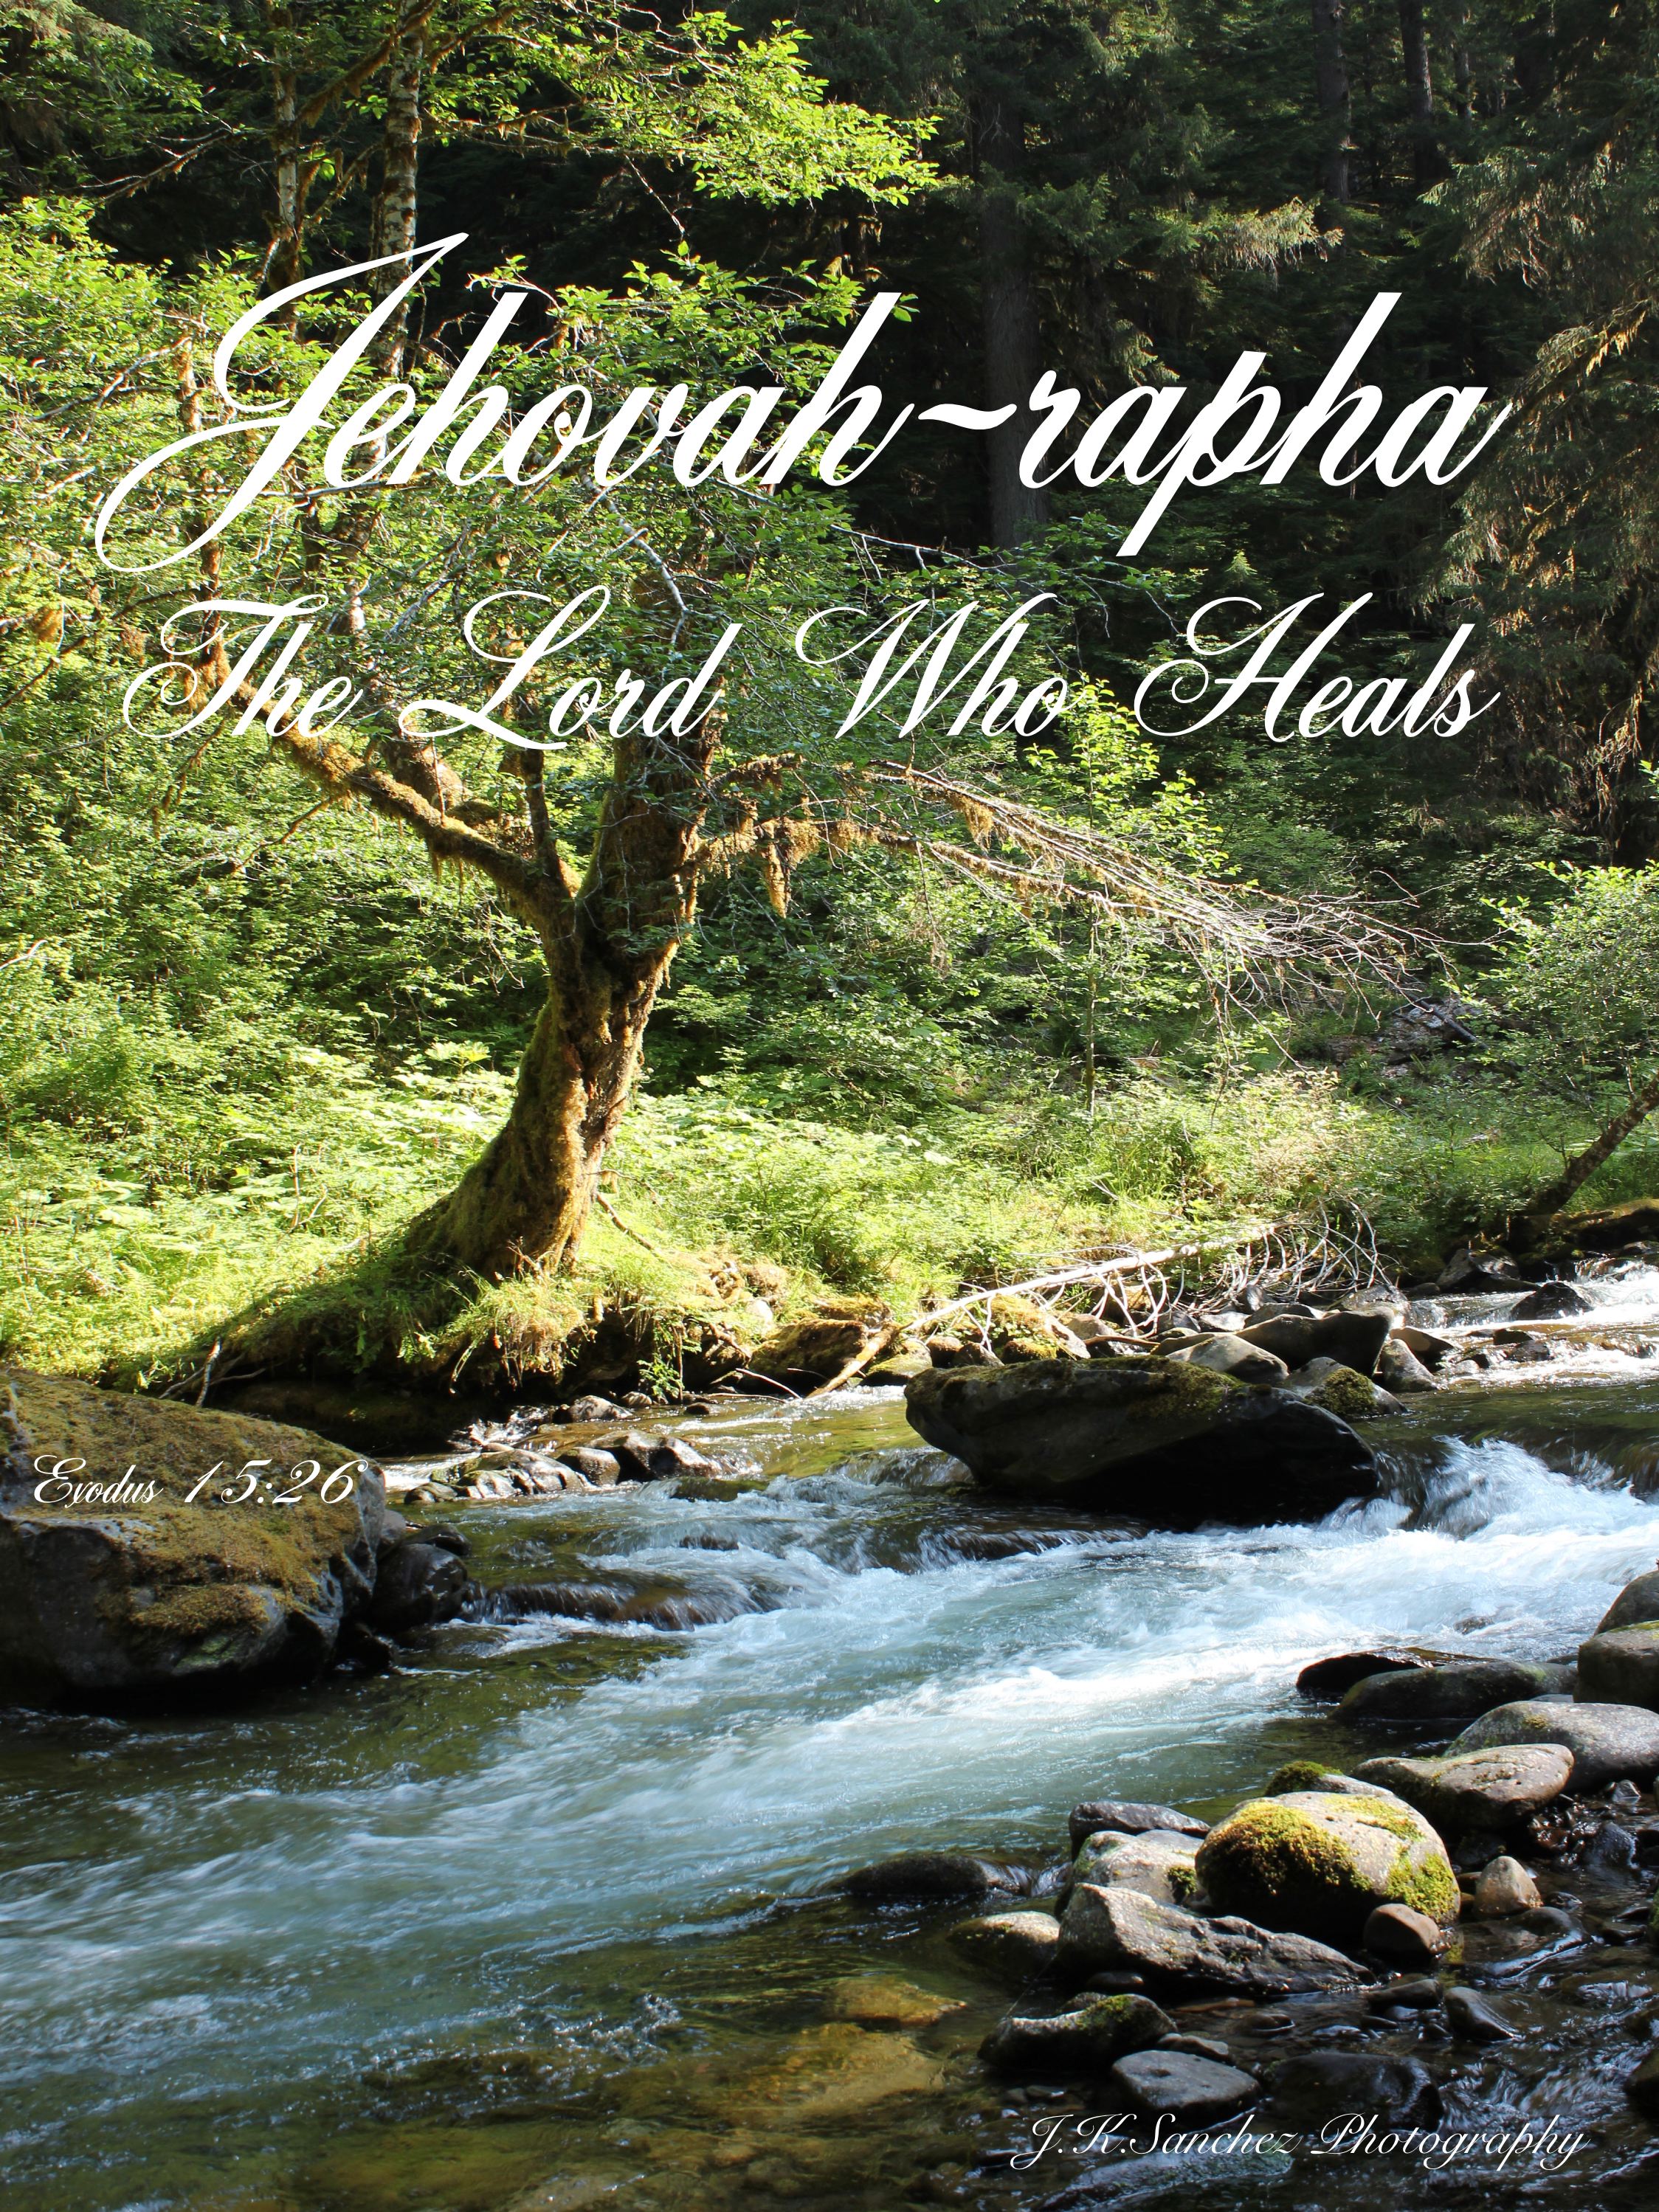 Jehovah-rapha